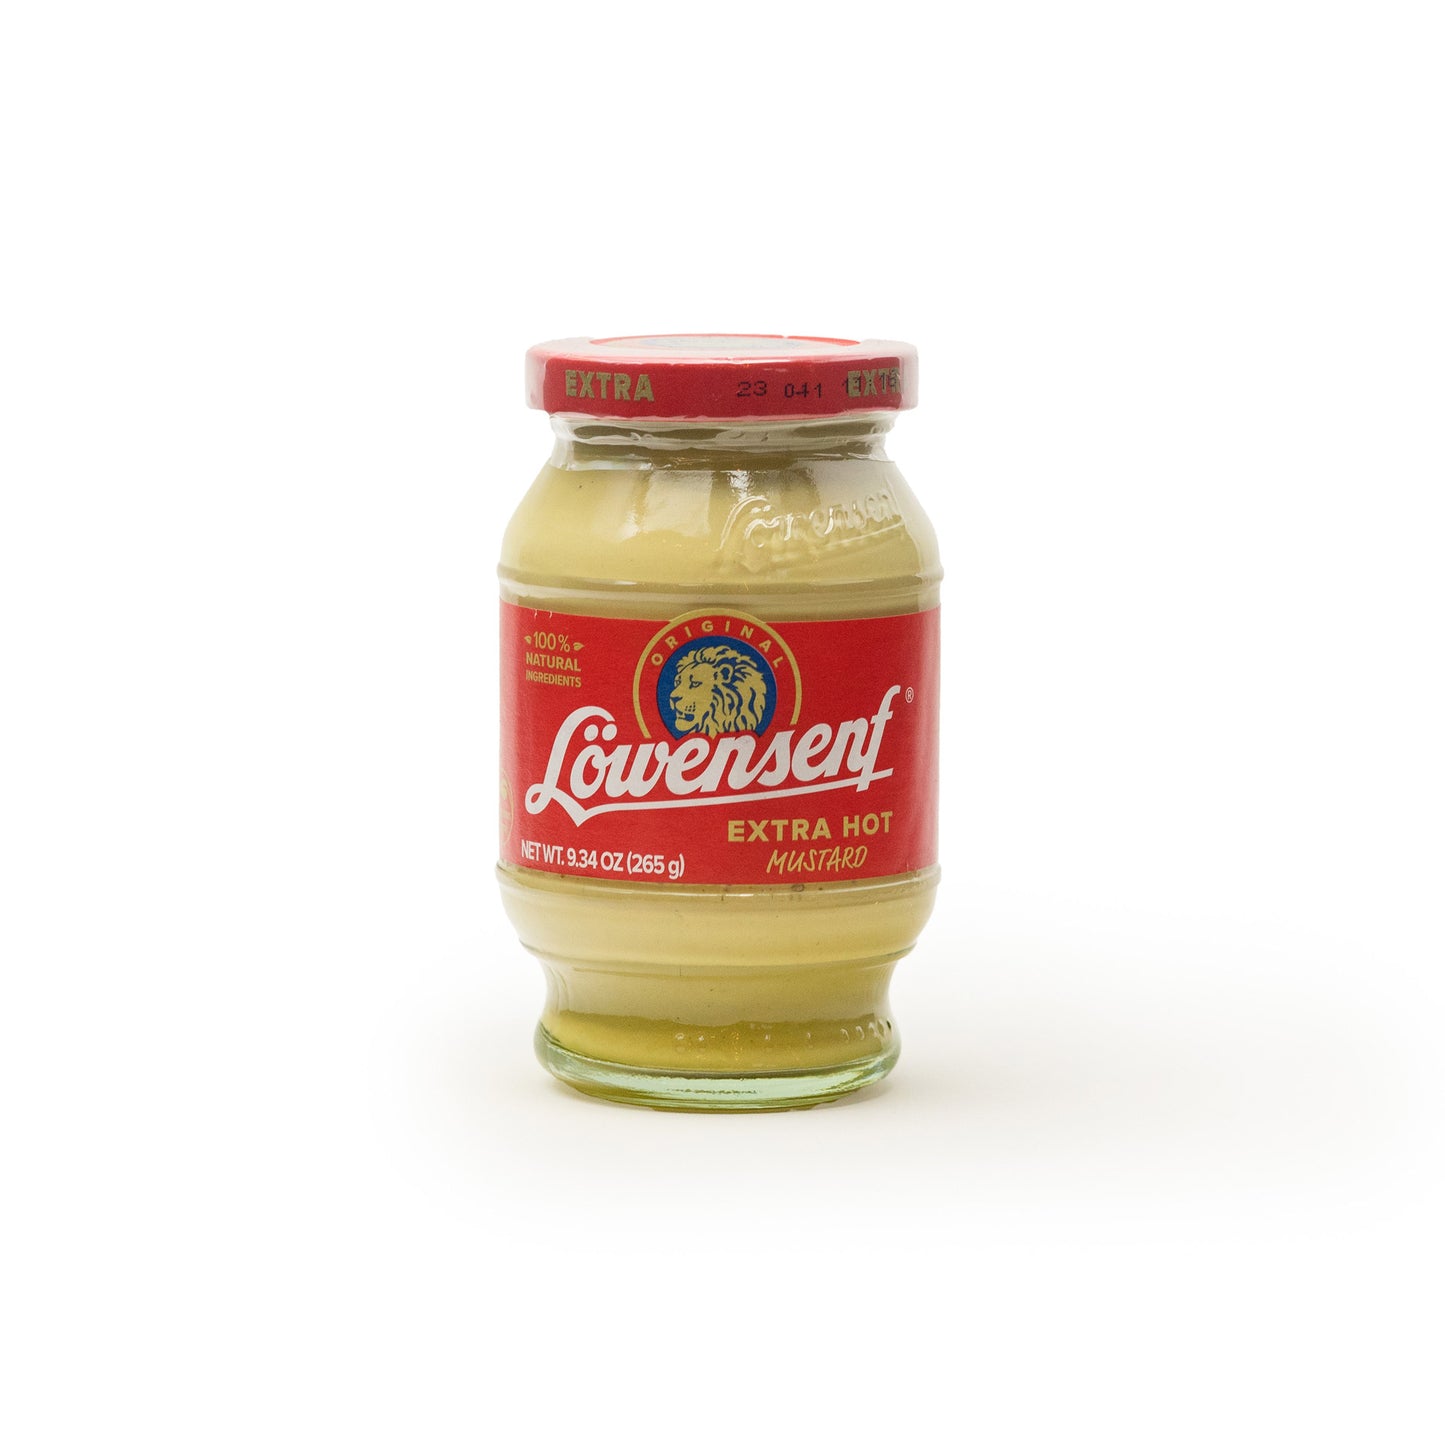 Lowensenf Mustard Extra Hot